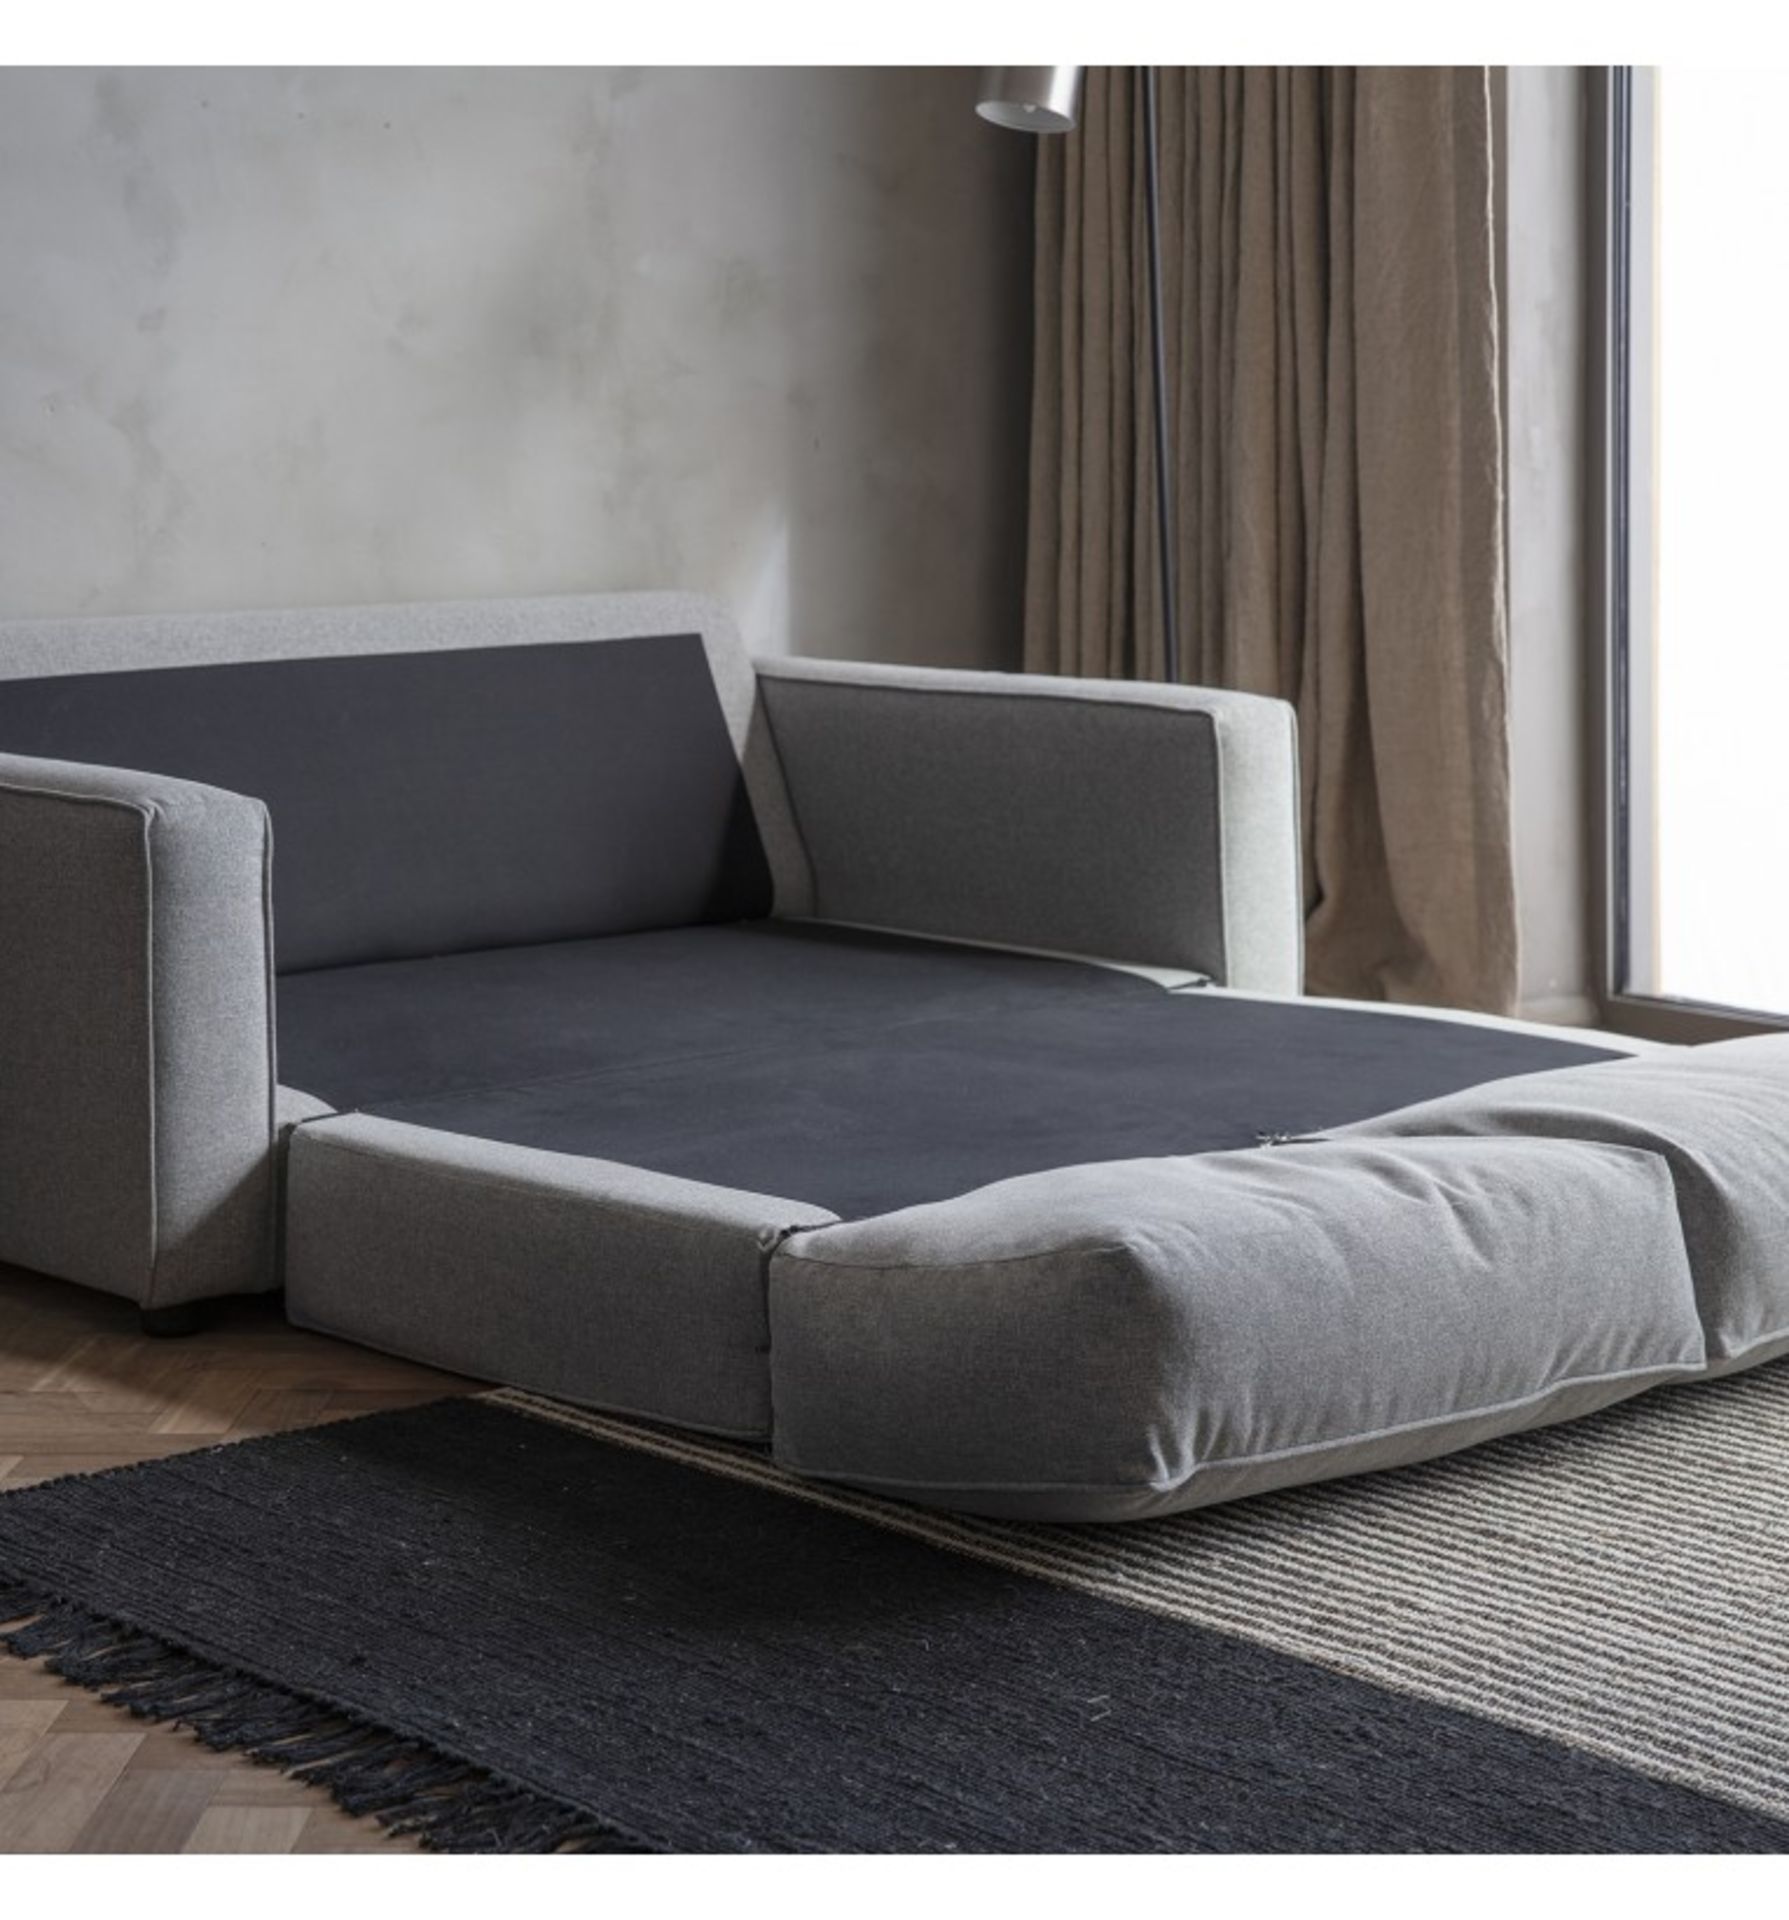 Luxury Sofa Bed - Image 2 of 2